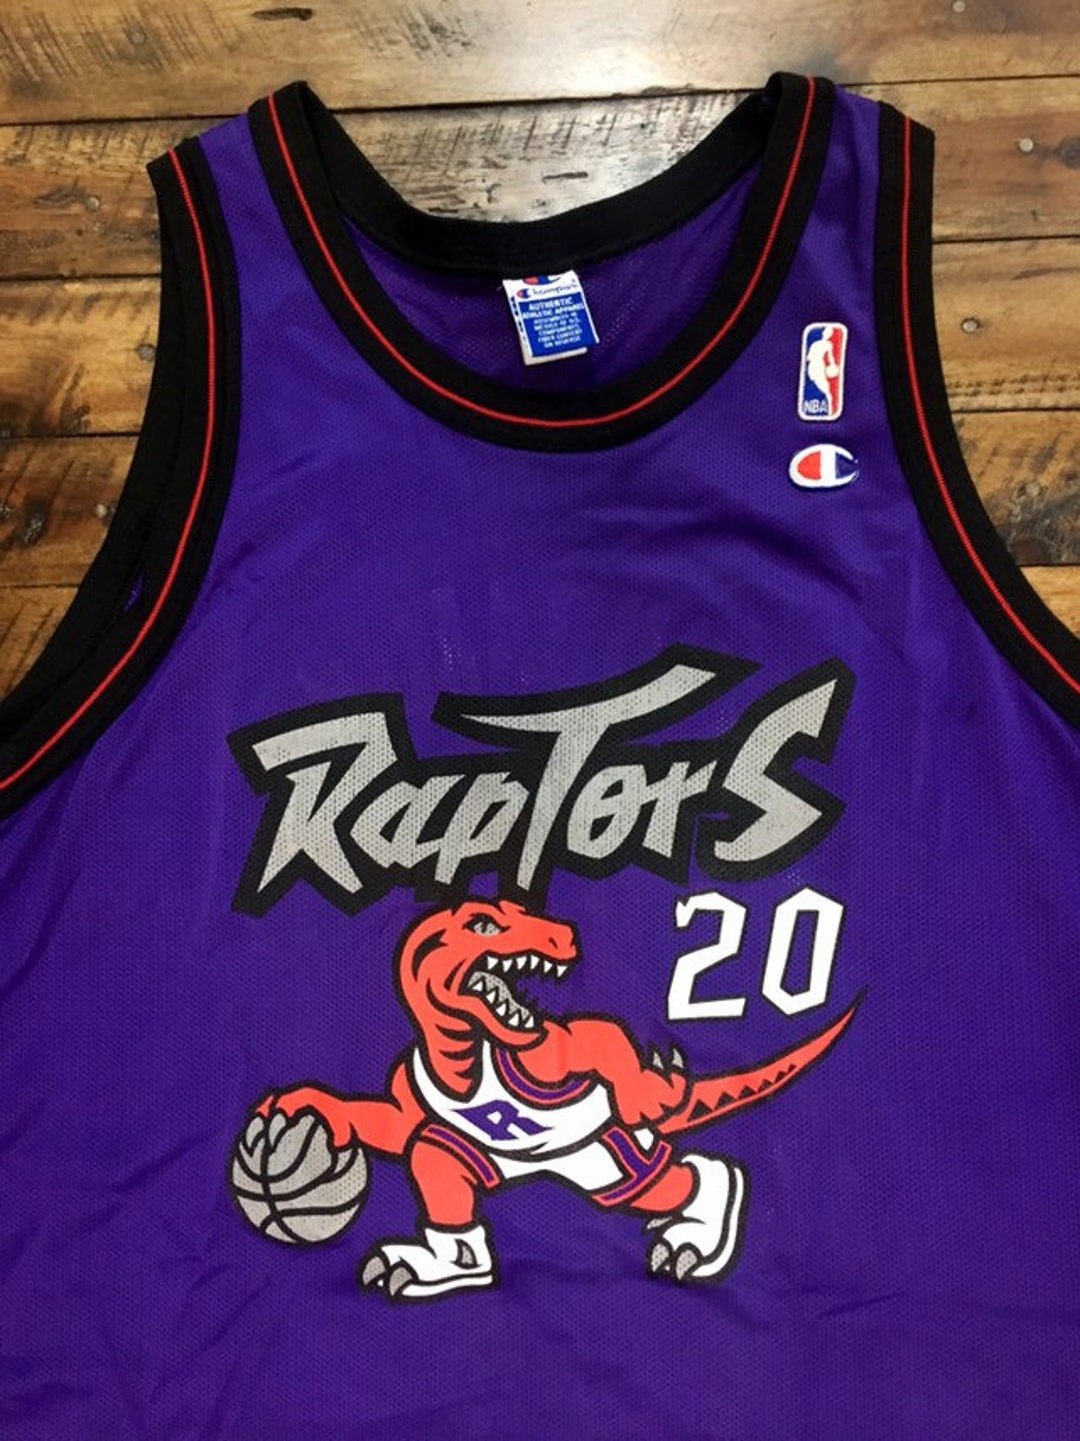 Raptors' 20th-anniversary logo has retro look